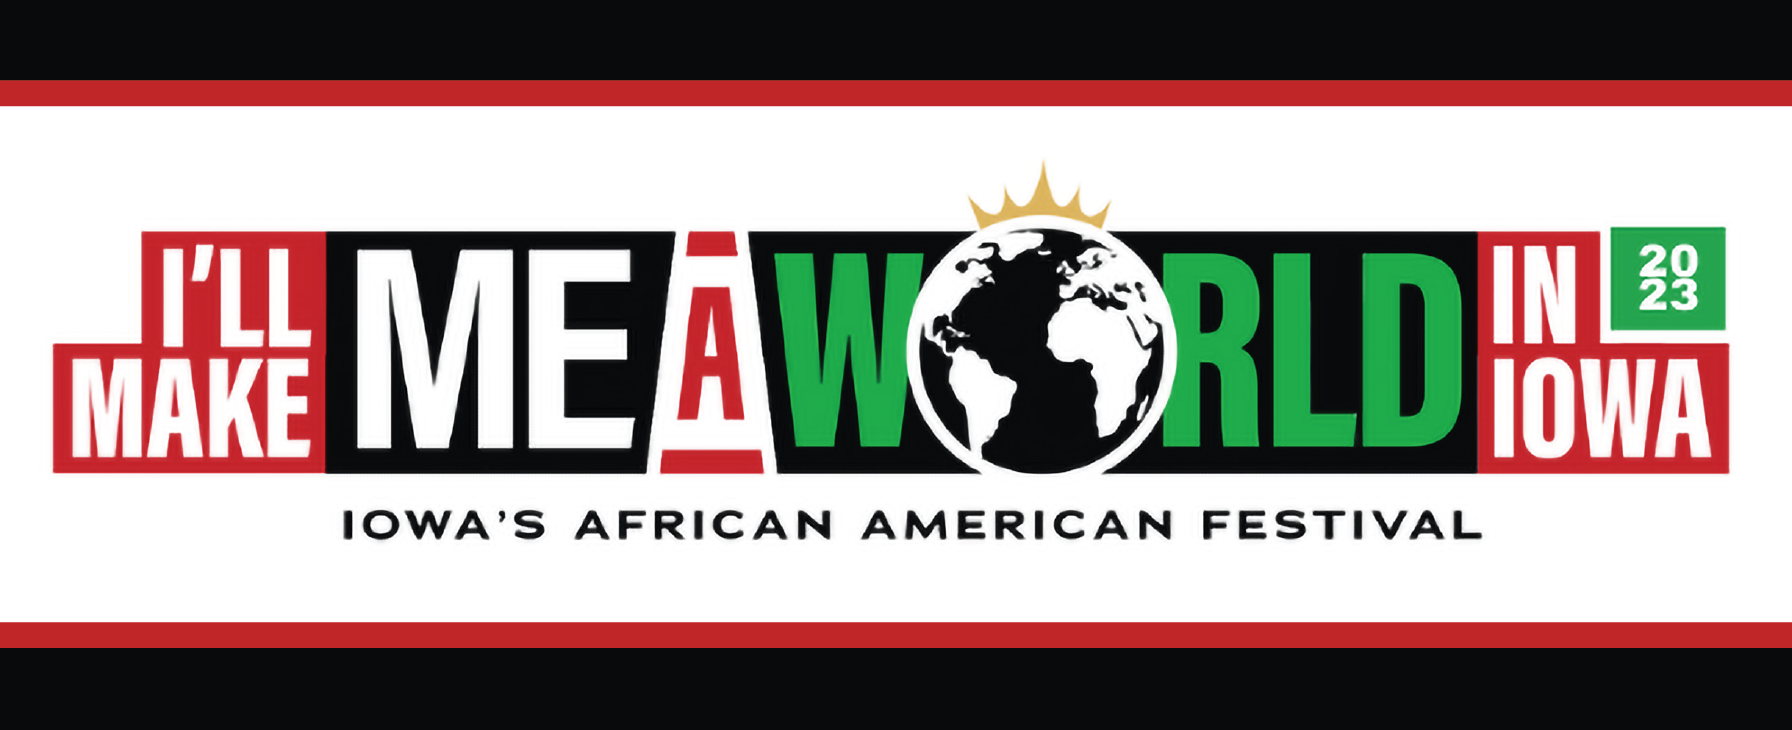 I"ll Make Me a World in Iowa: Iowa's African American Festival